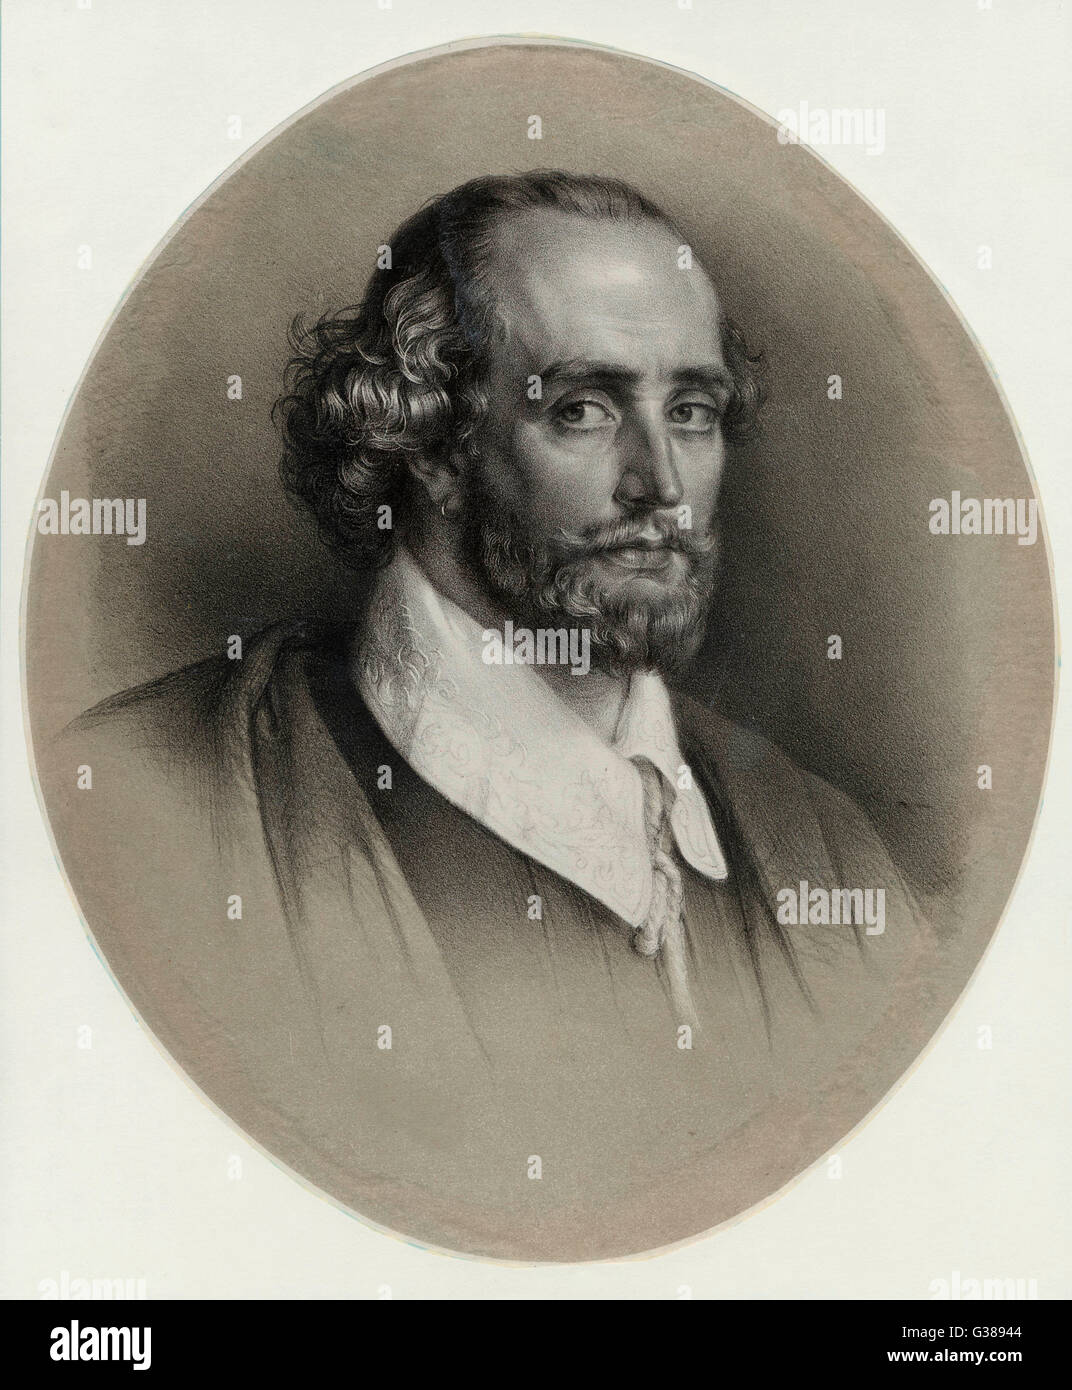 WILLIAM SHAKESPEARE (1564 - 1616) Playwright and poet. Stock Photo